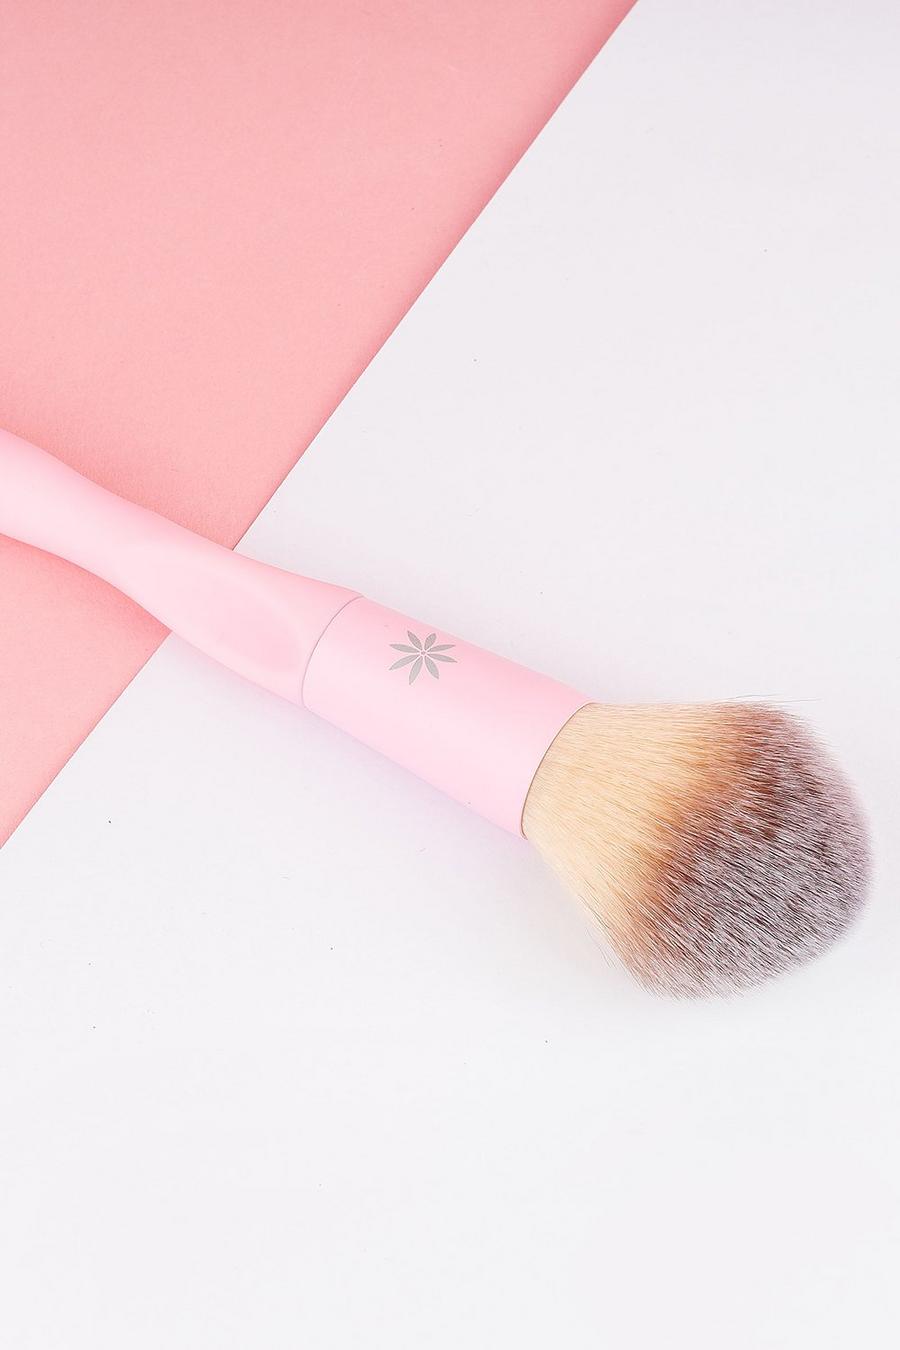 Baby pink Brushworks Hd Tapered Powder Brush